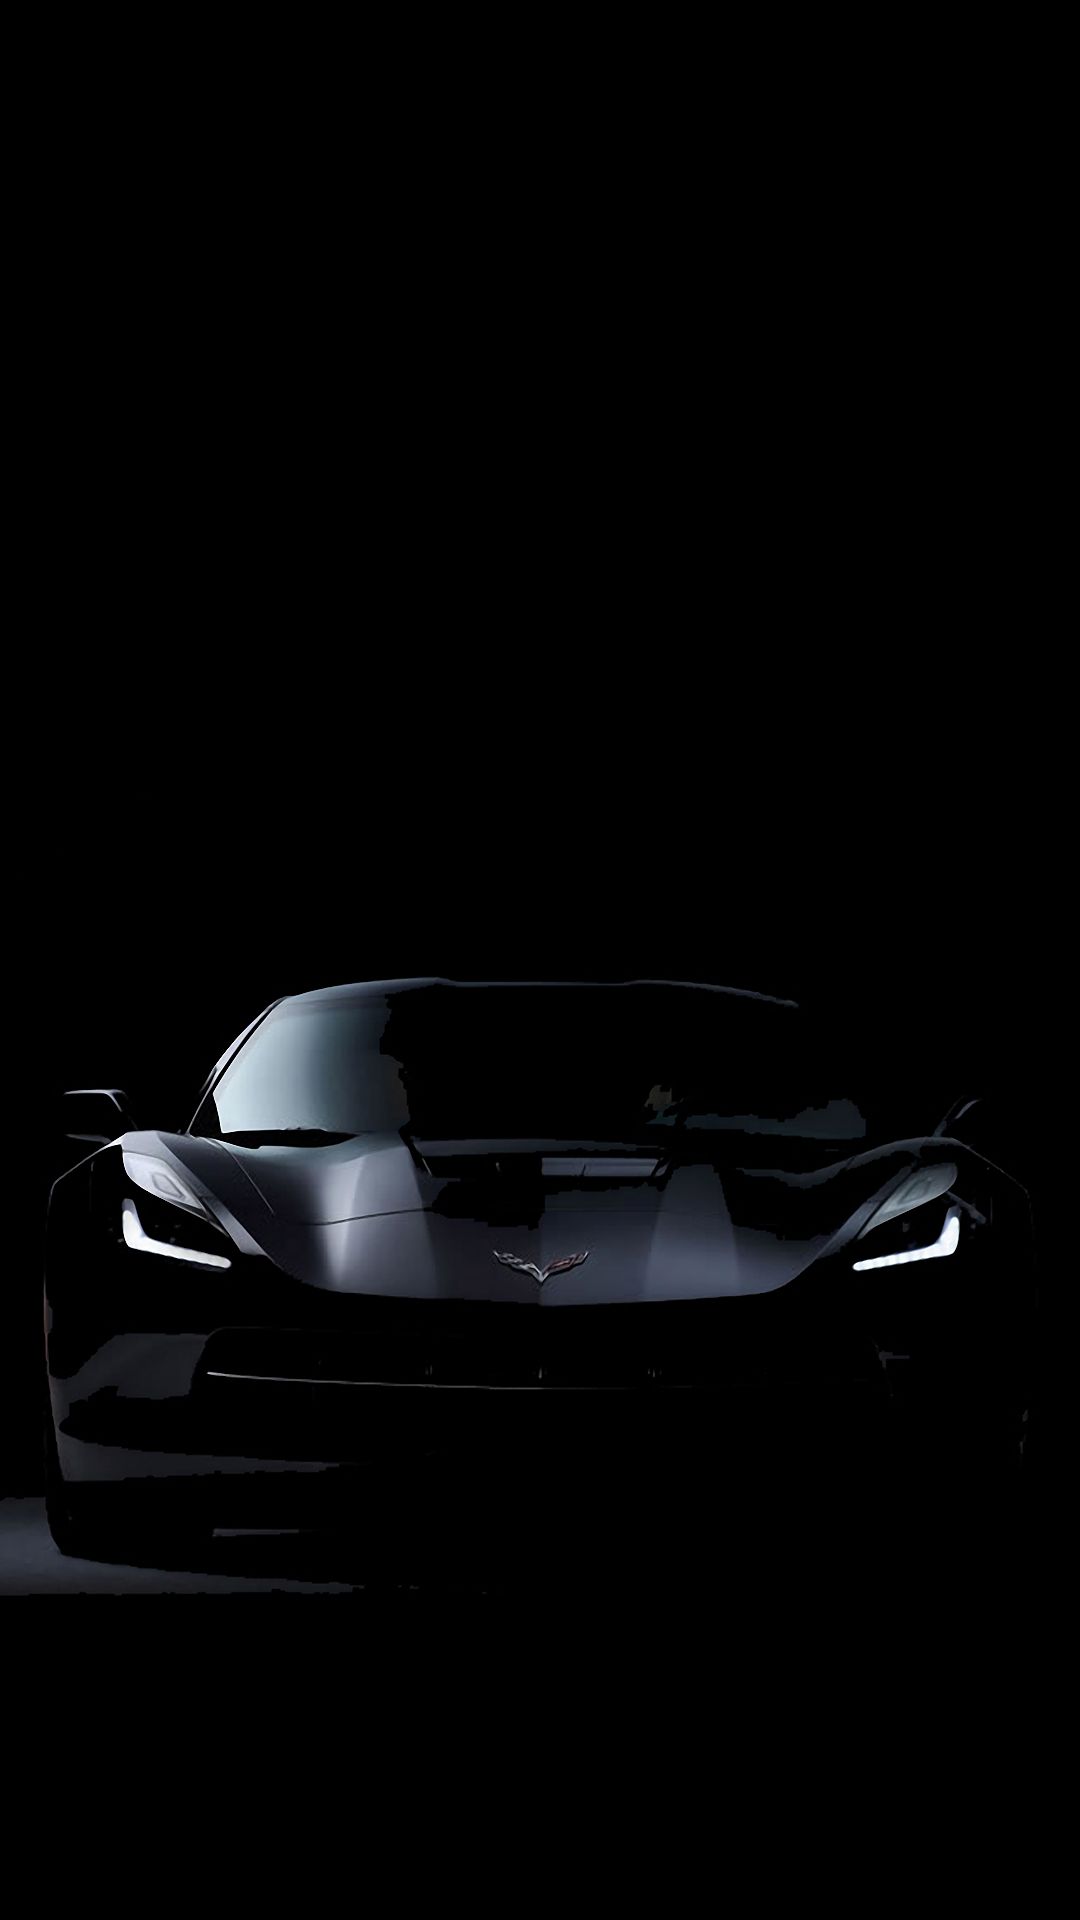 Corvette Logo Wallpaper Iphone 